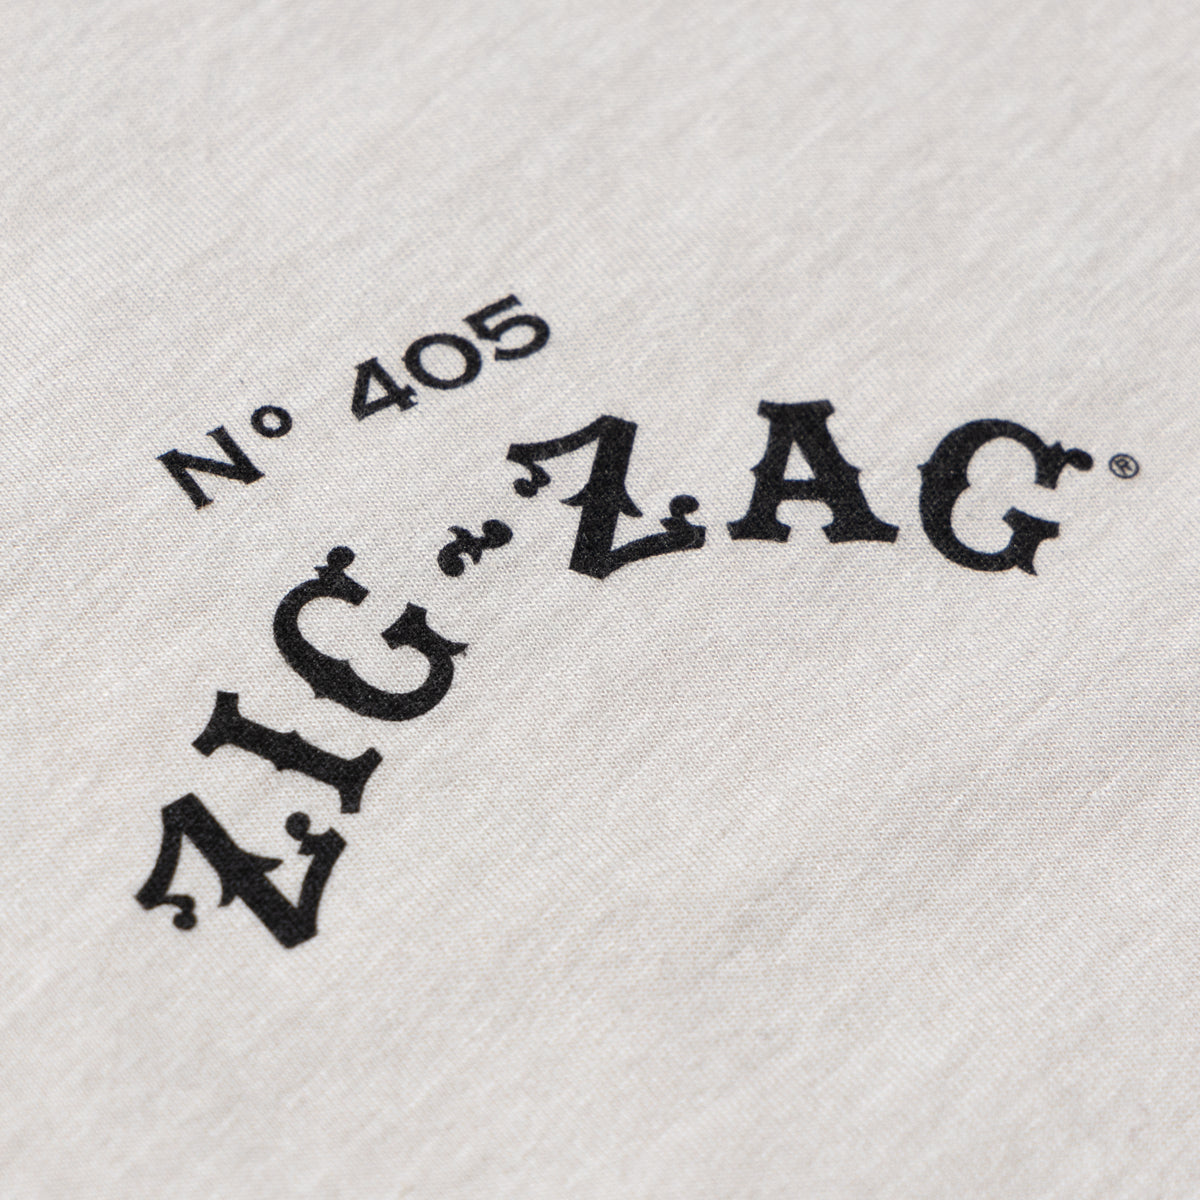 Zig-Zag® | Official Hemp T-Shirt T-shirt Zig Zag   